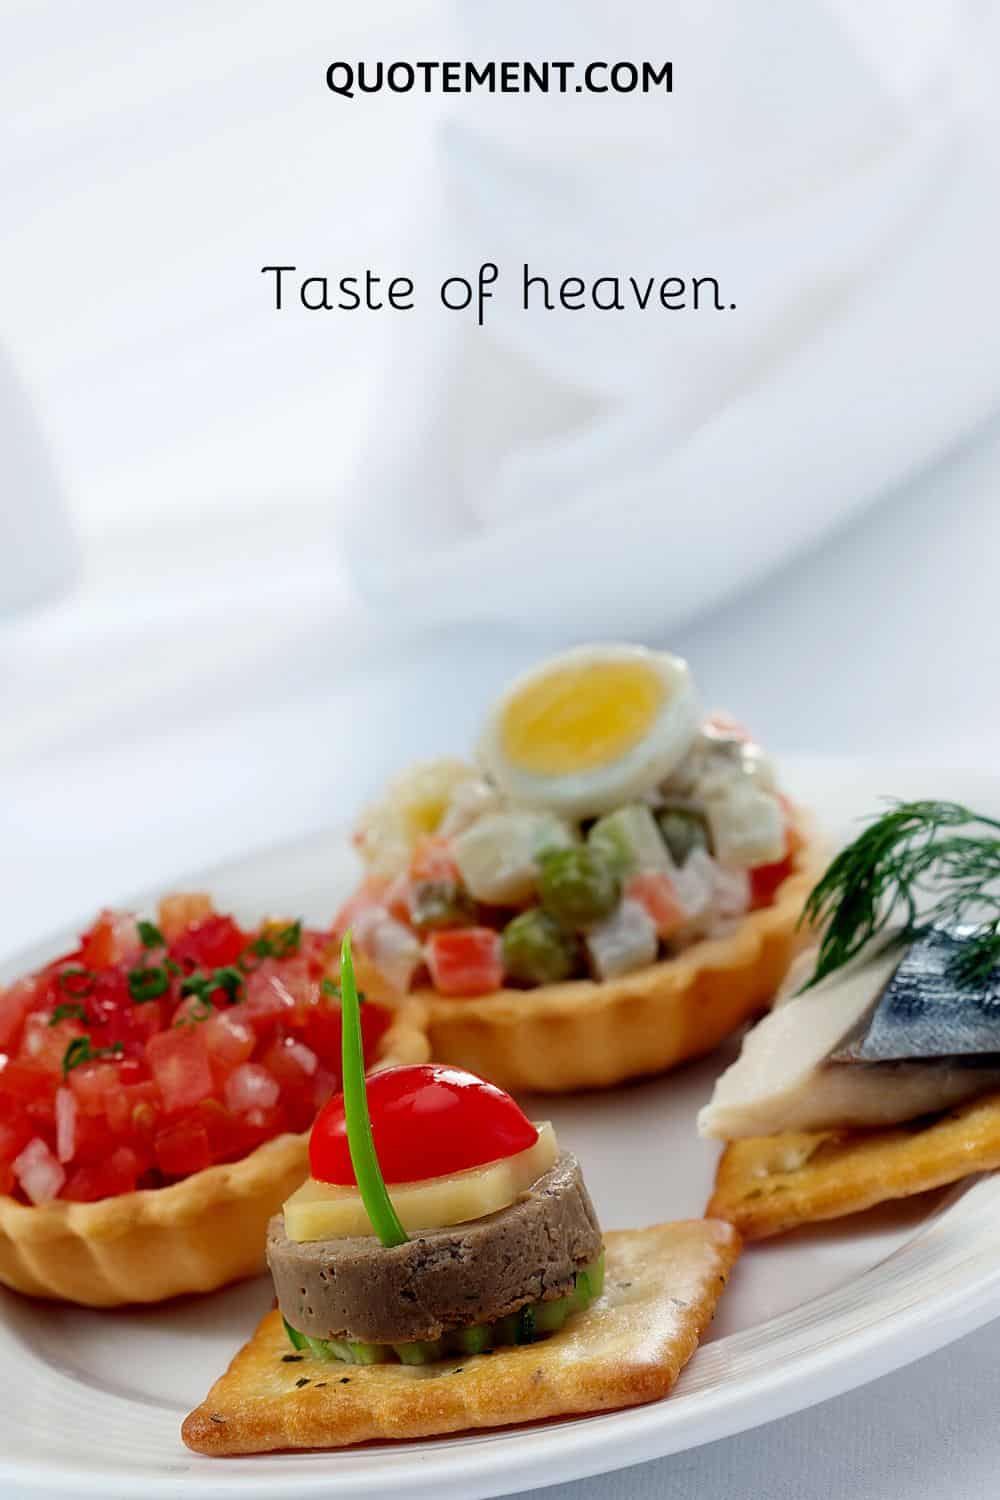 Taste of heaven